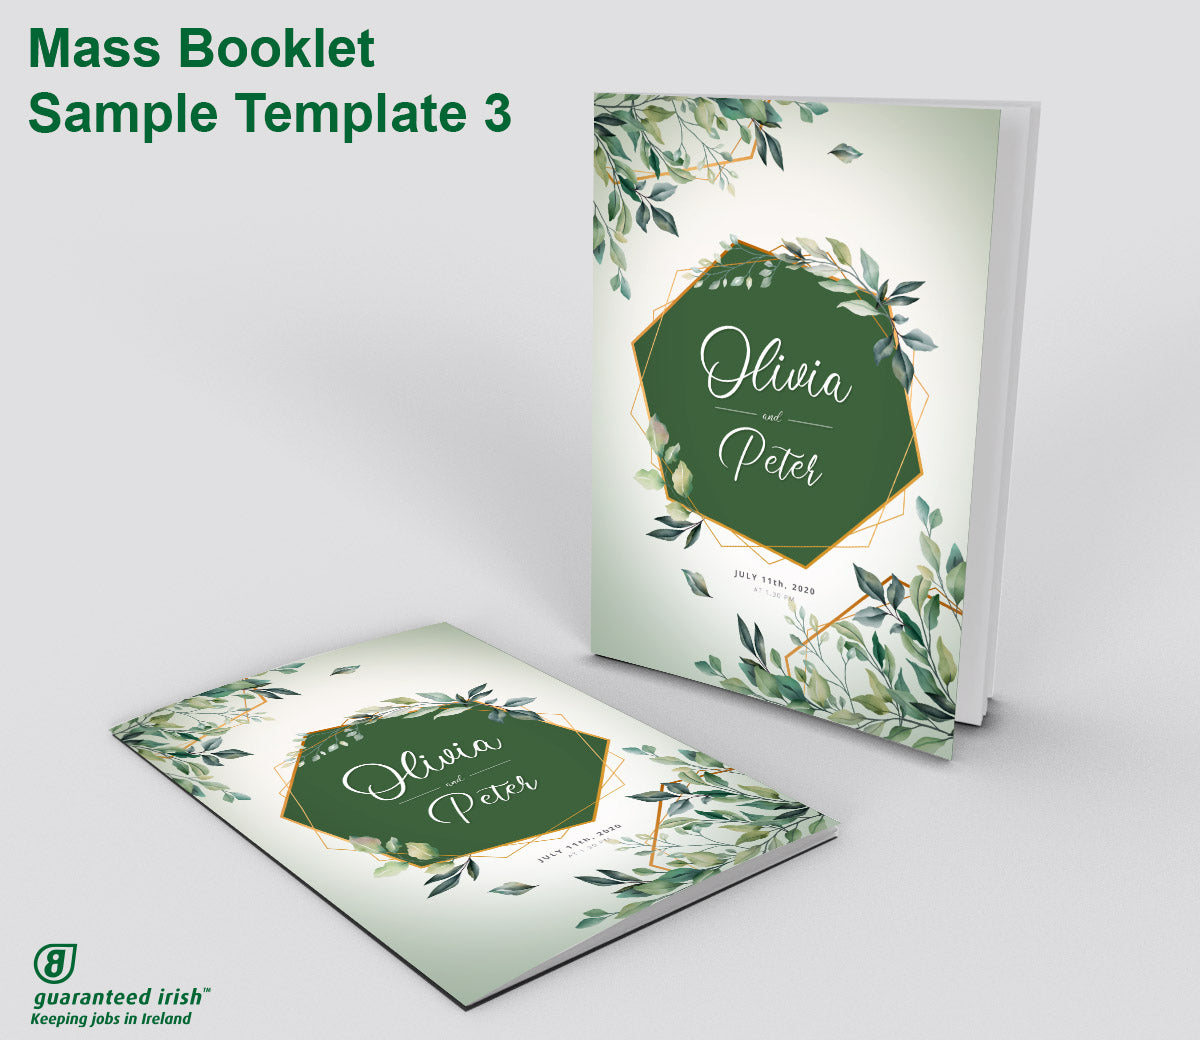 Wedding Mass Booklets - Sample 3